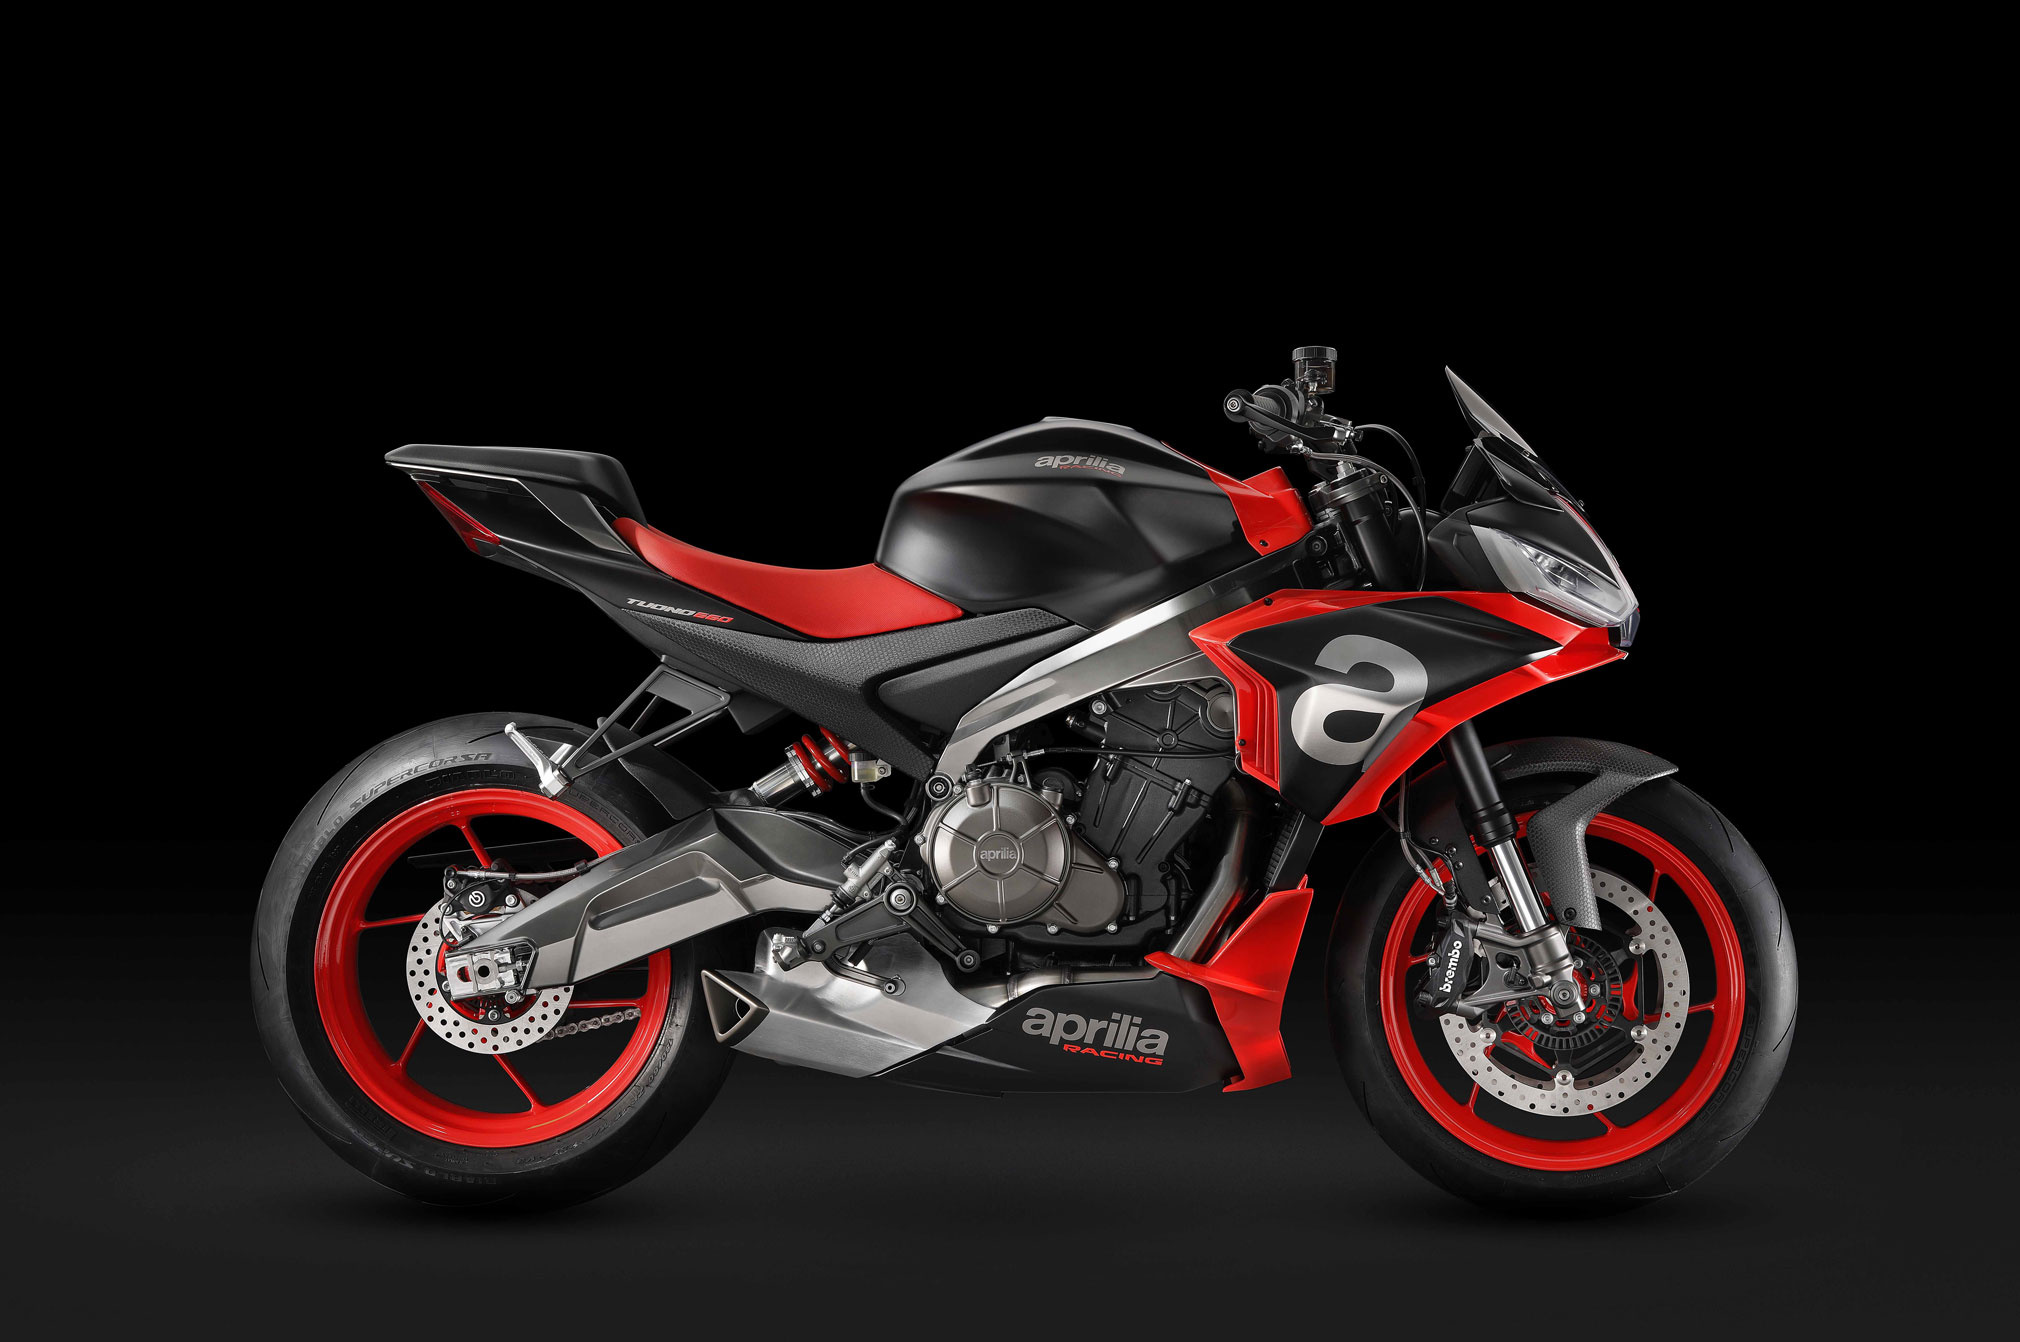 Aprilia Tuono 660, Concept guide, Total Motorcycle review, Future possibilities, 2020x1350 HD Desktop